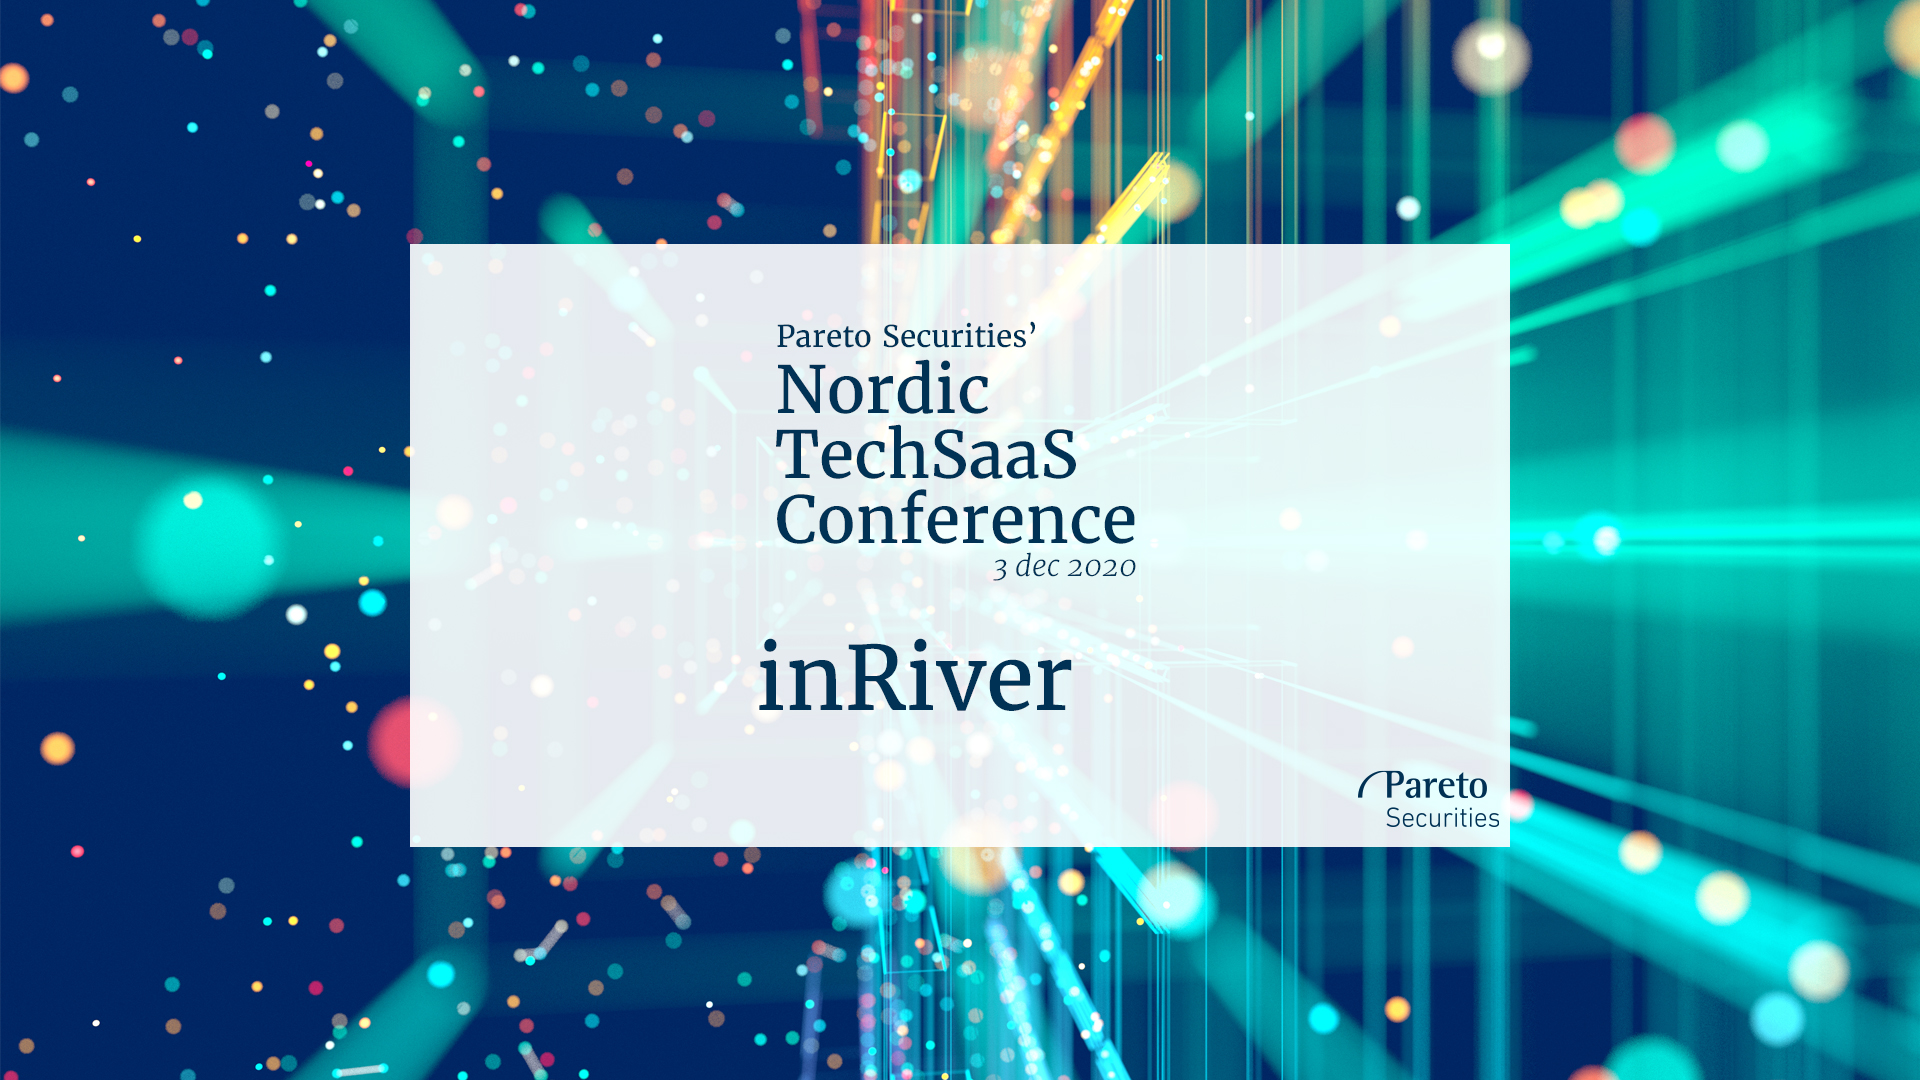 inRiver / Pareto Securities’ virtual Nordic TechSaaS Conference